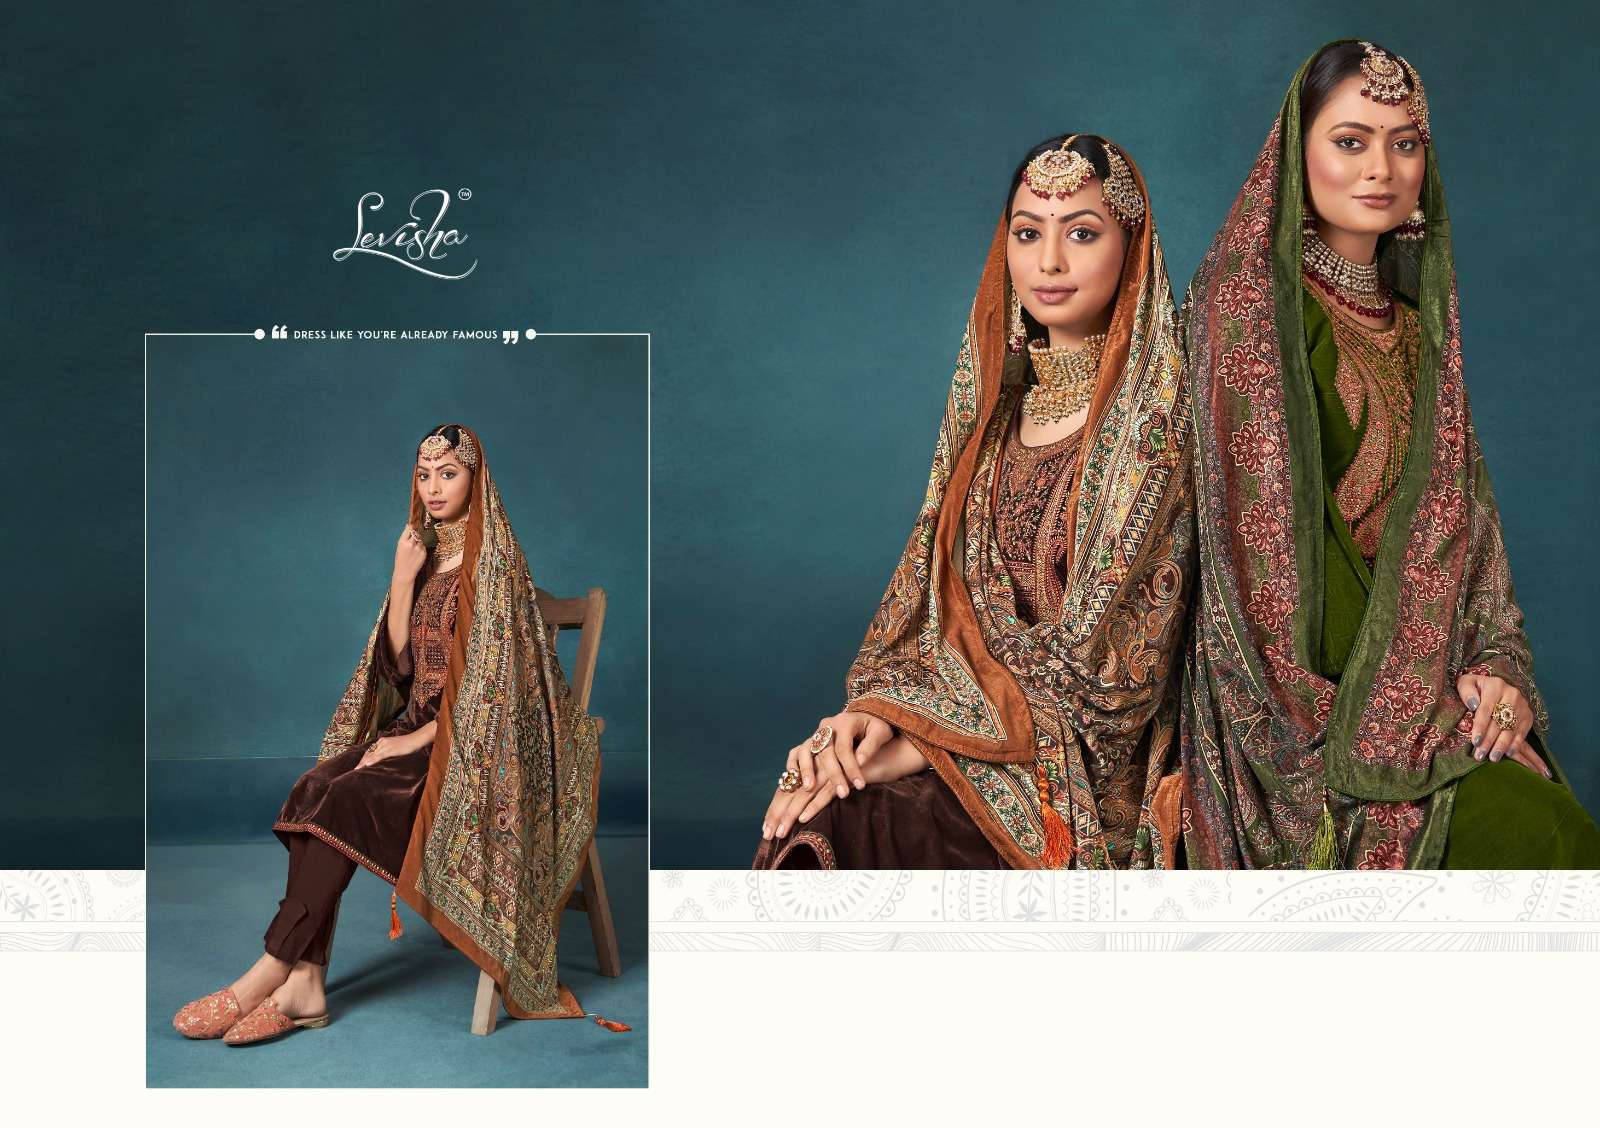 noor-e-bahar levisha 01-06 series designer pakistani fancy salwar kameez wholesaler surat gujarat